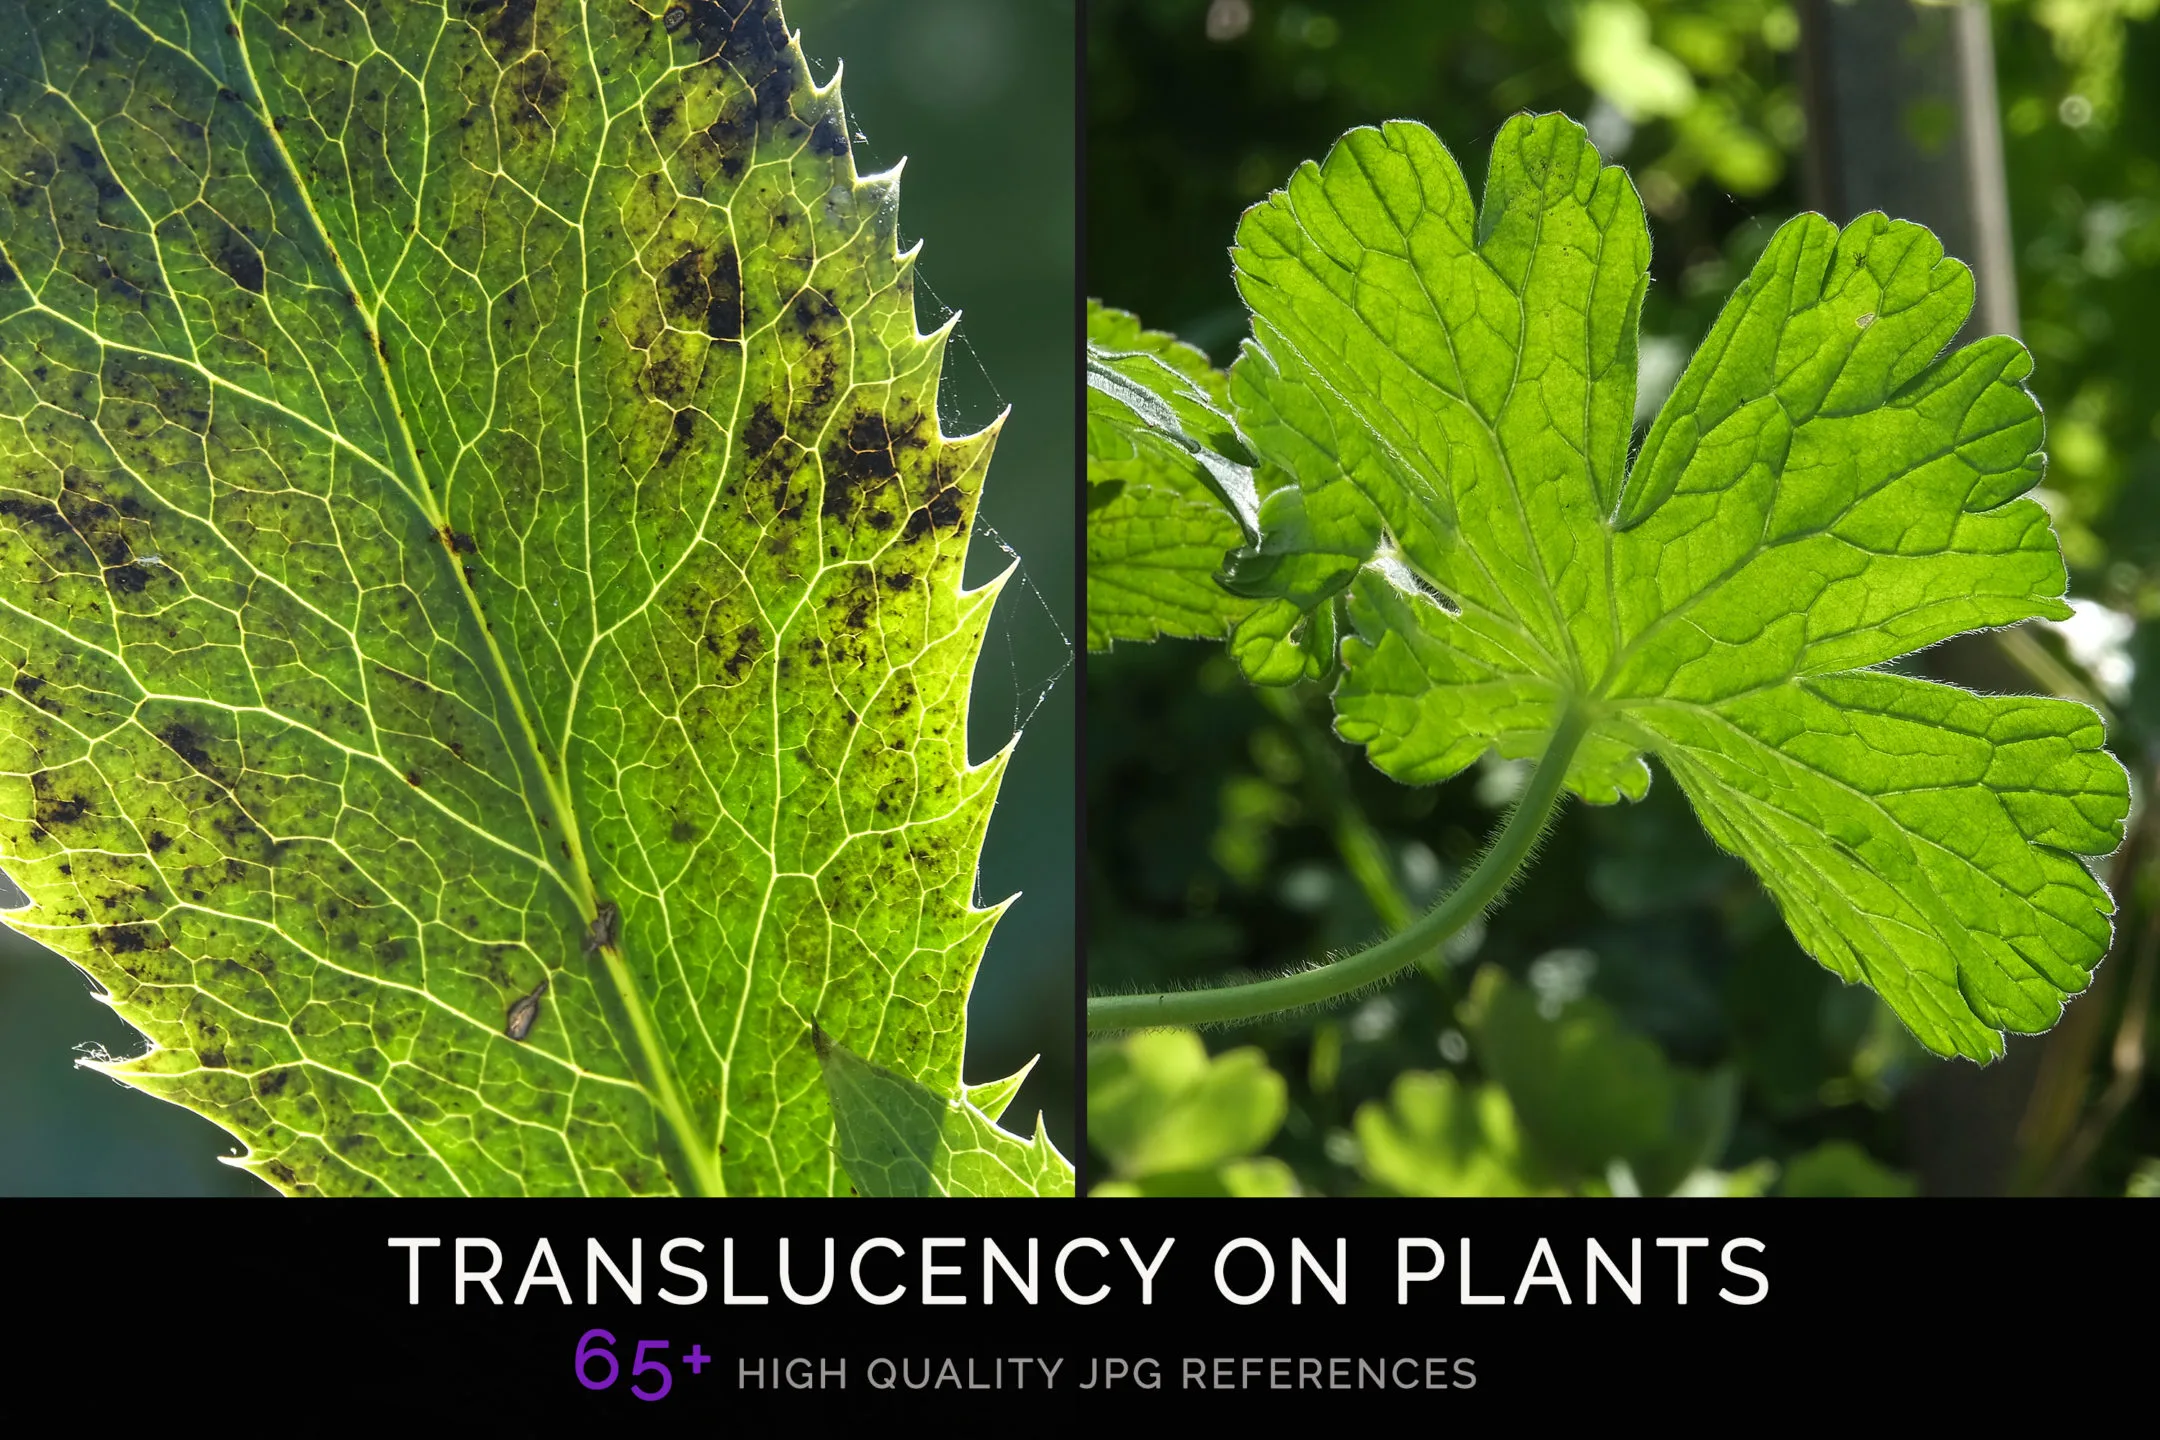 TRANSLUCENCY ON PLANTS